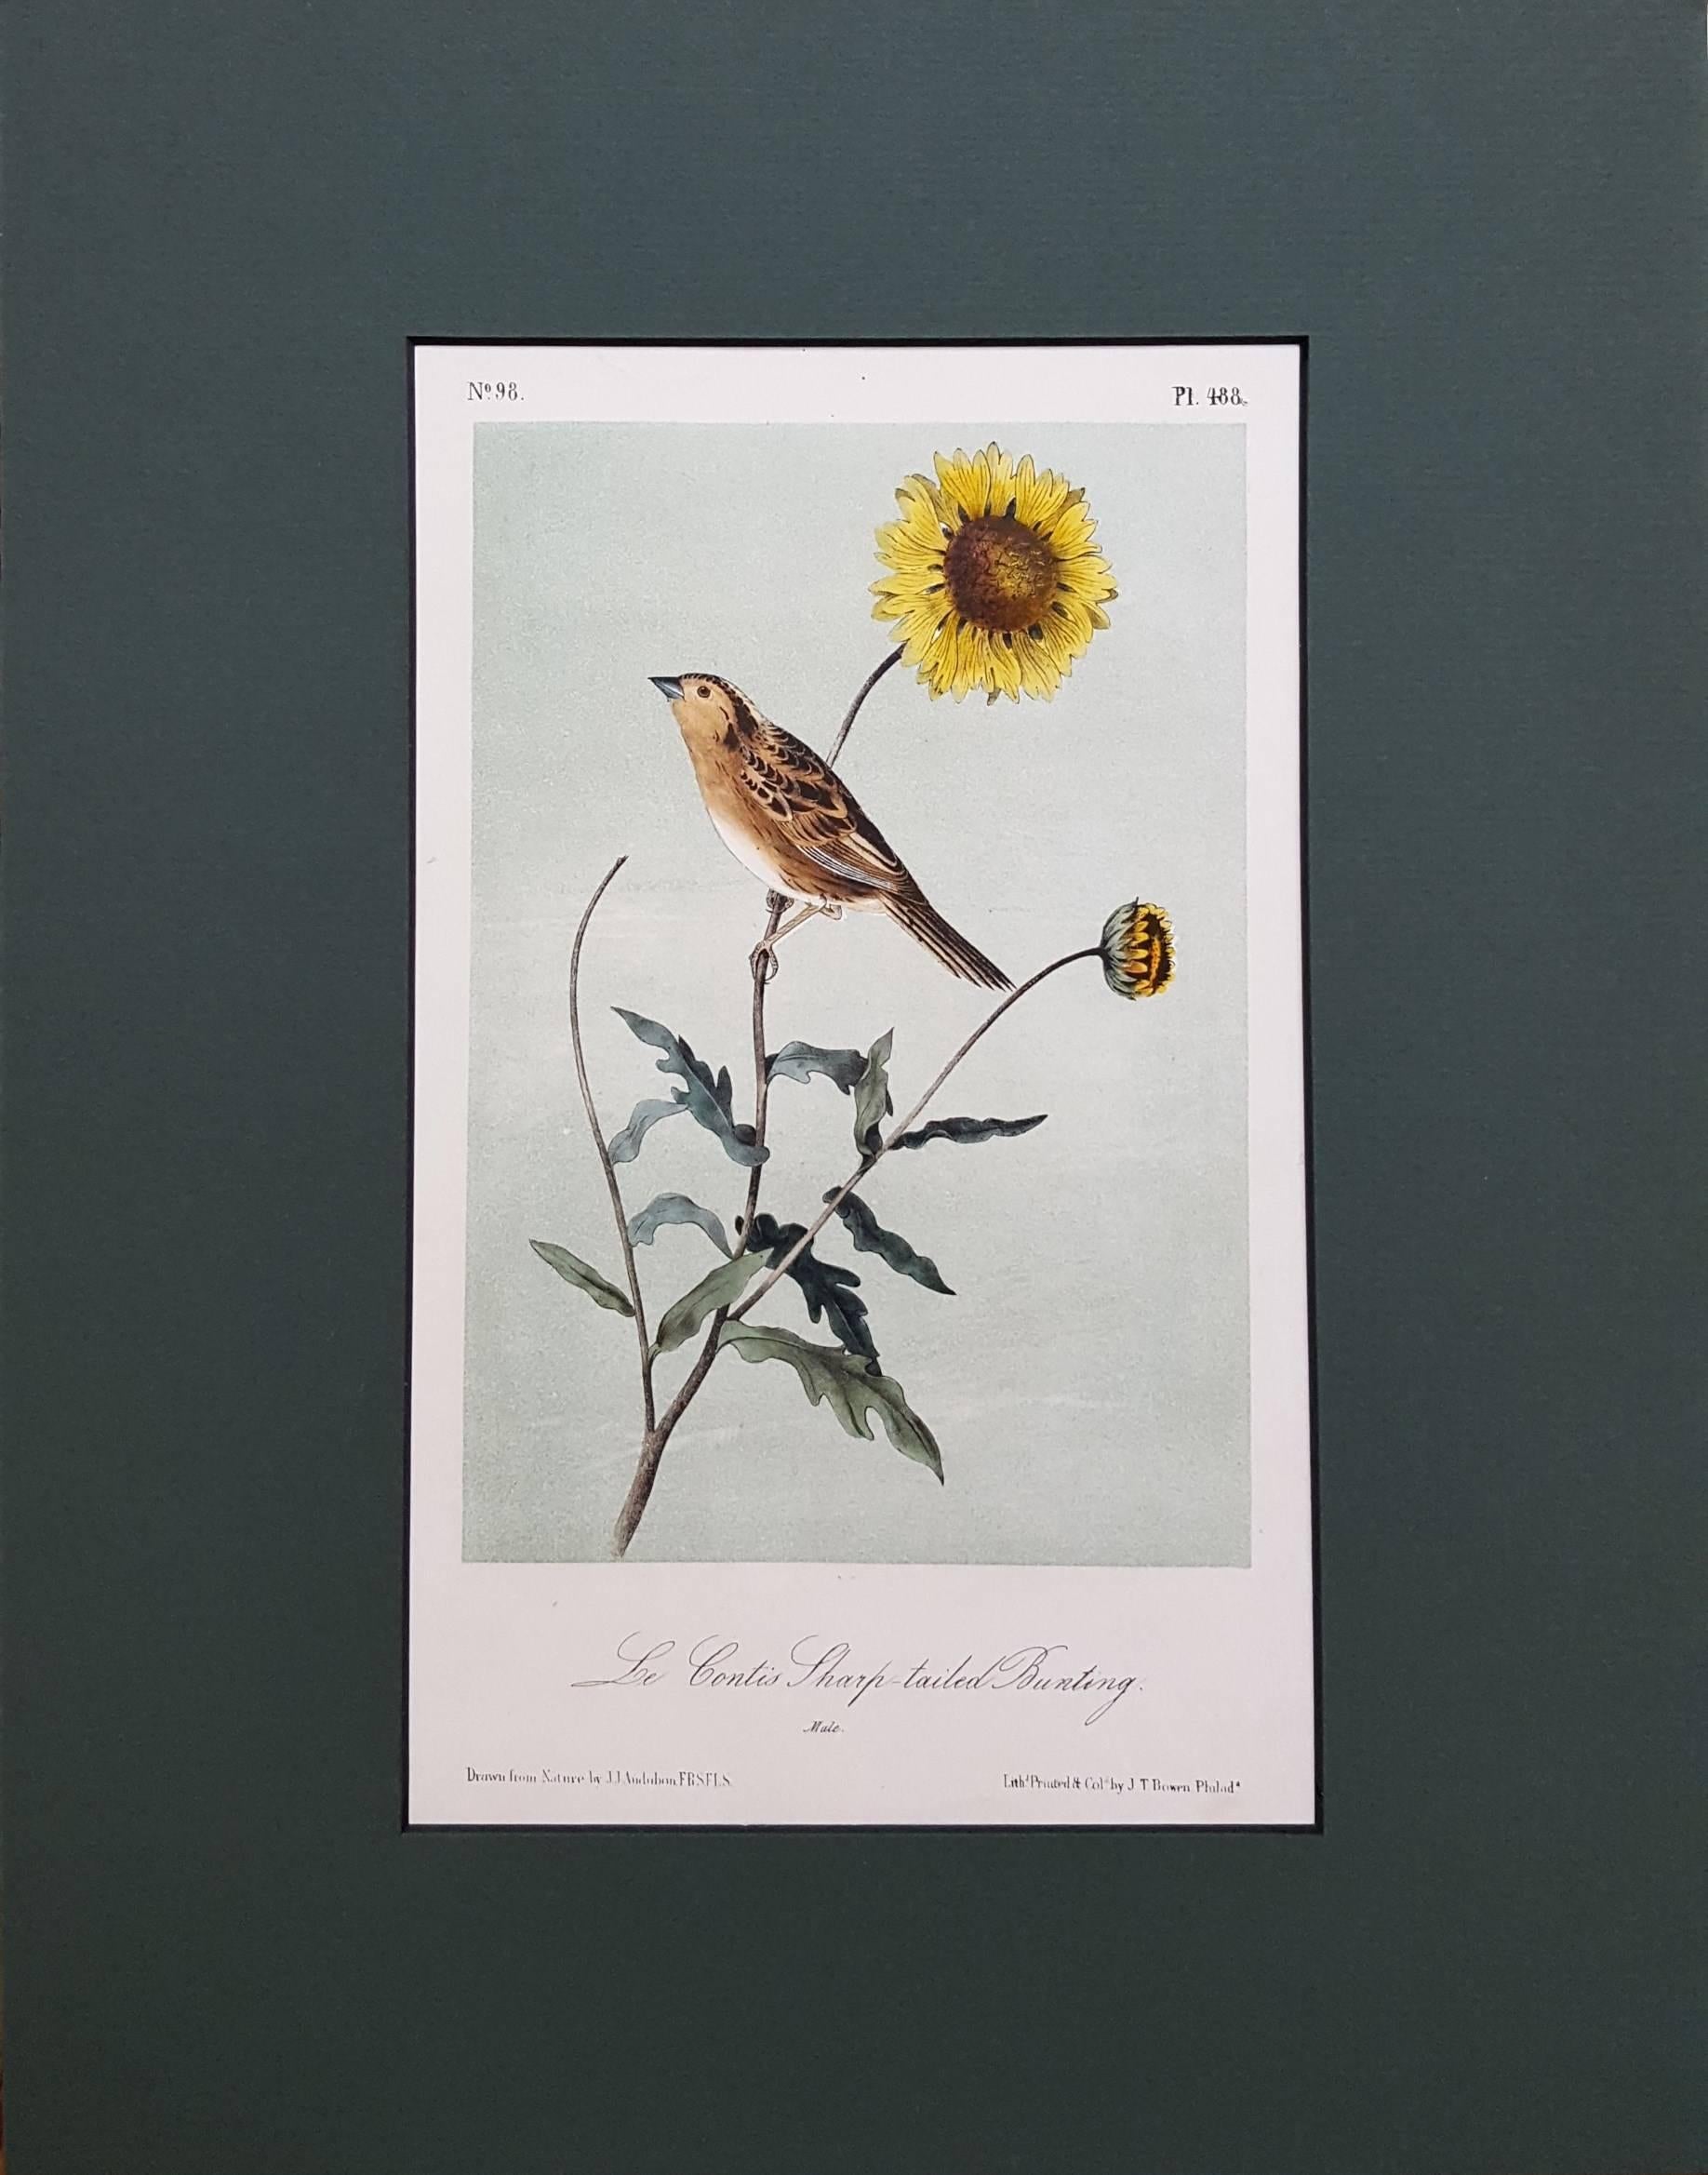 Le Contis Sharp-Tailed Bunting - Print by John James Audubon